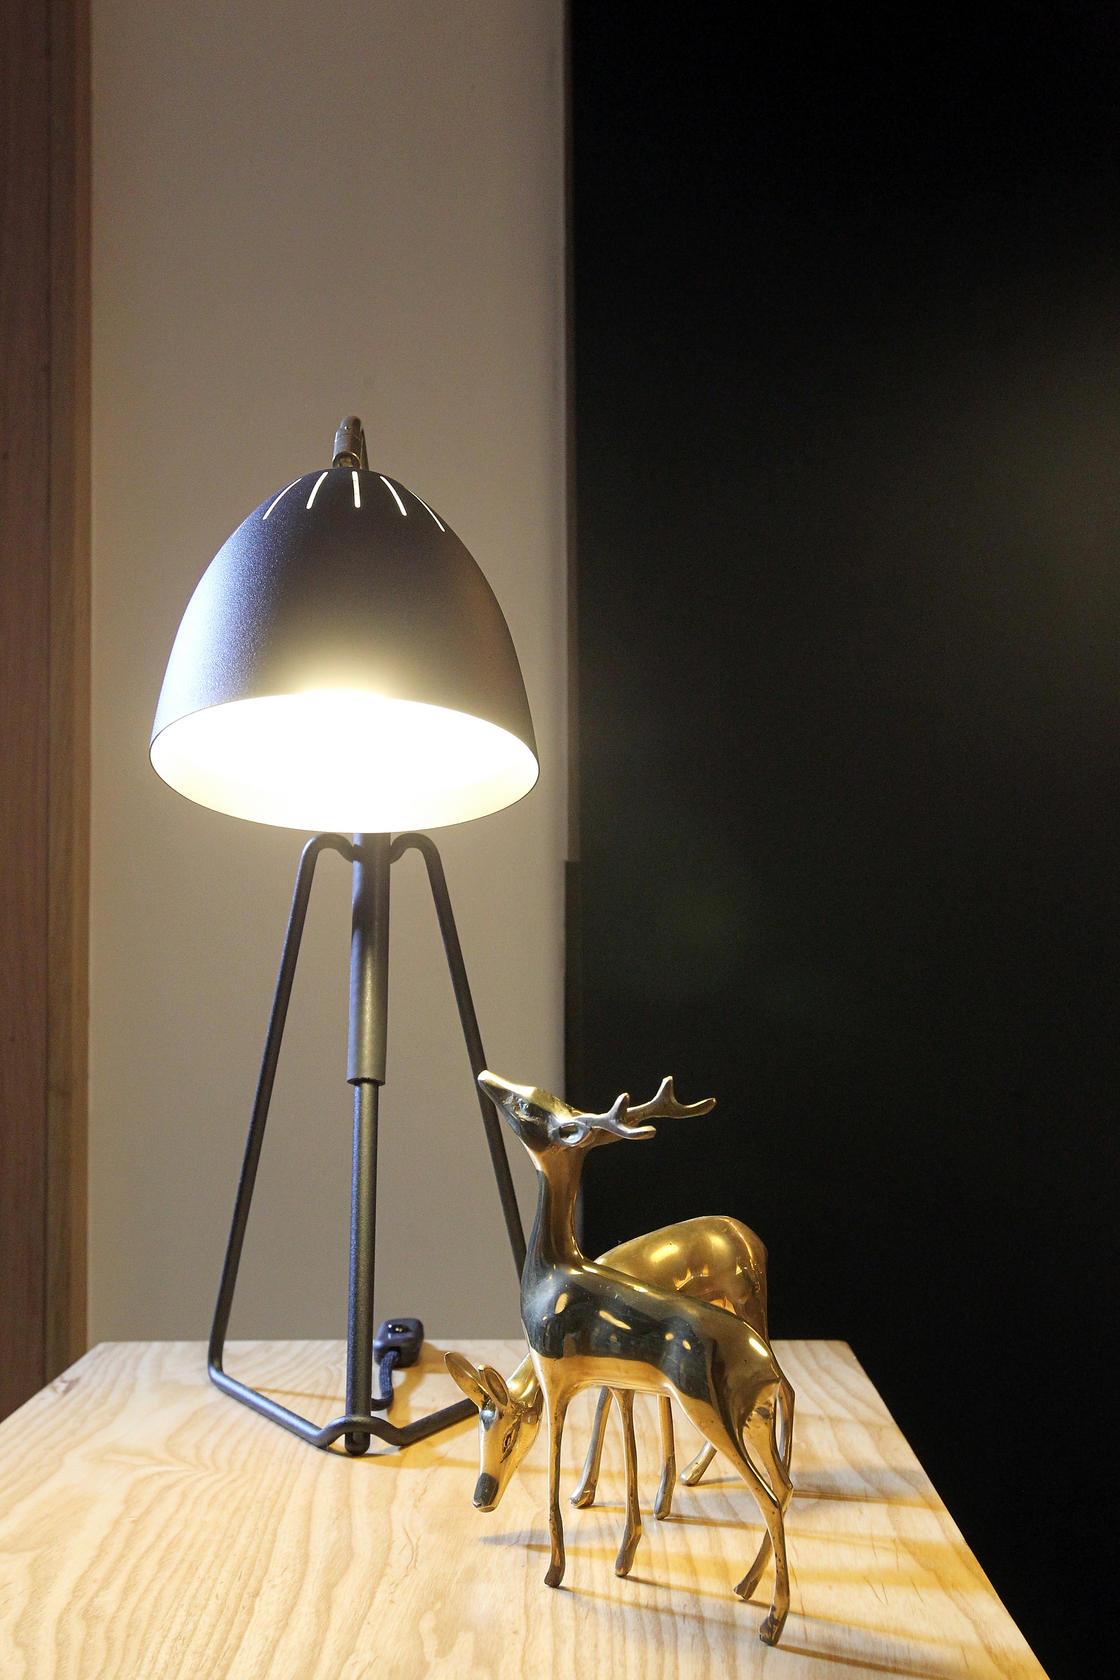 Orsjo table lamp